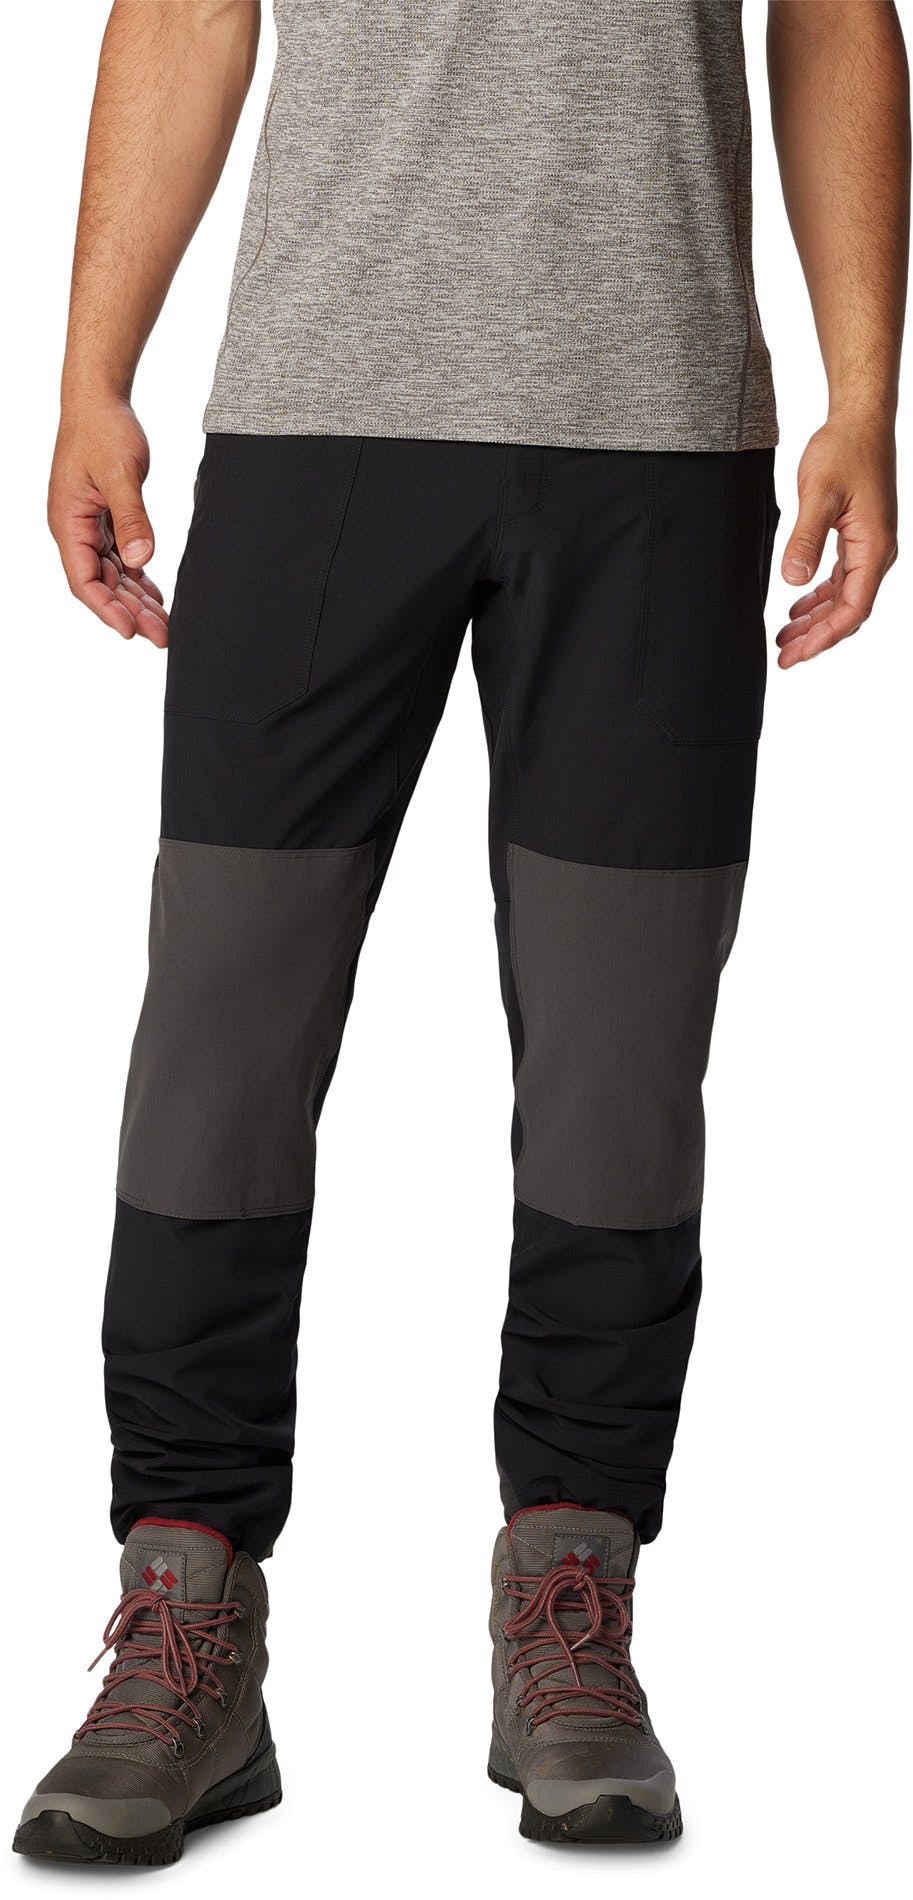 Product image for Landroamer Utility Pants - Men's